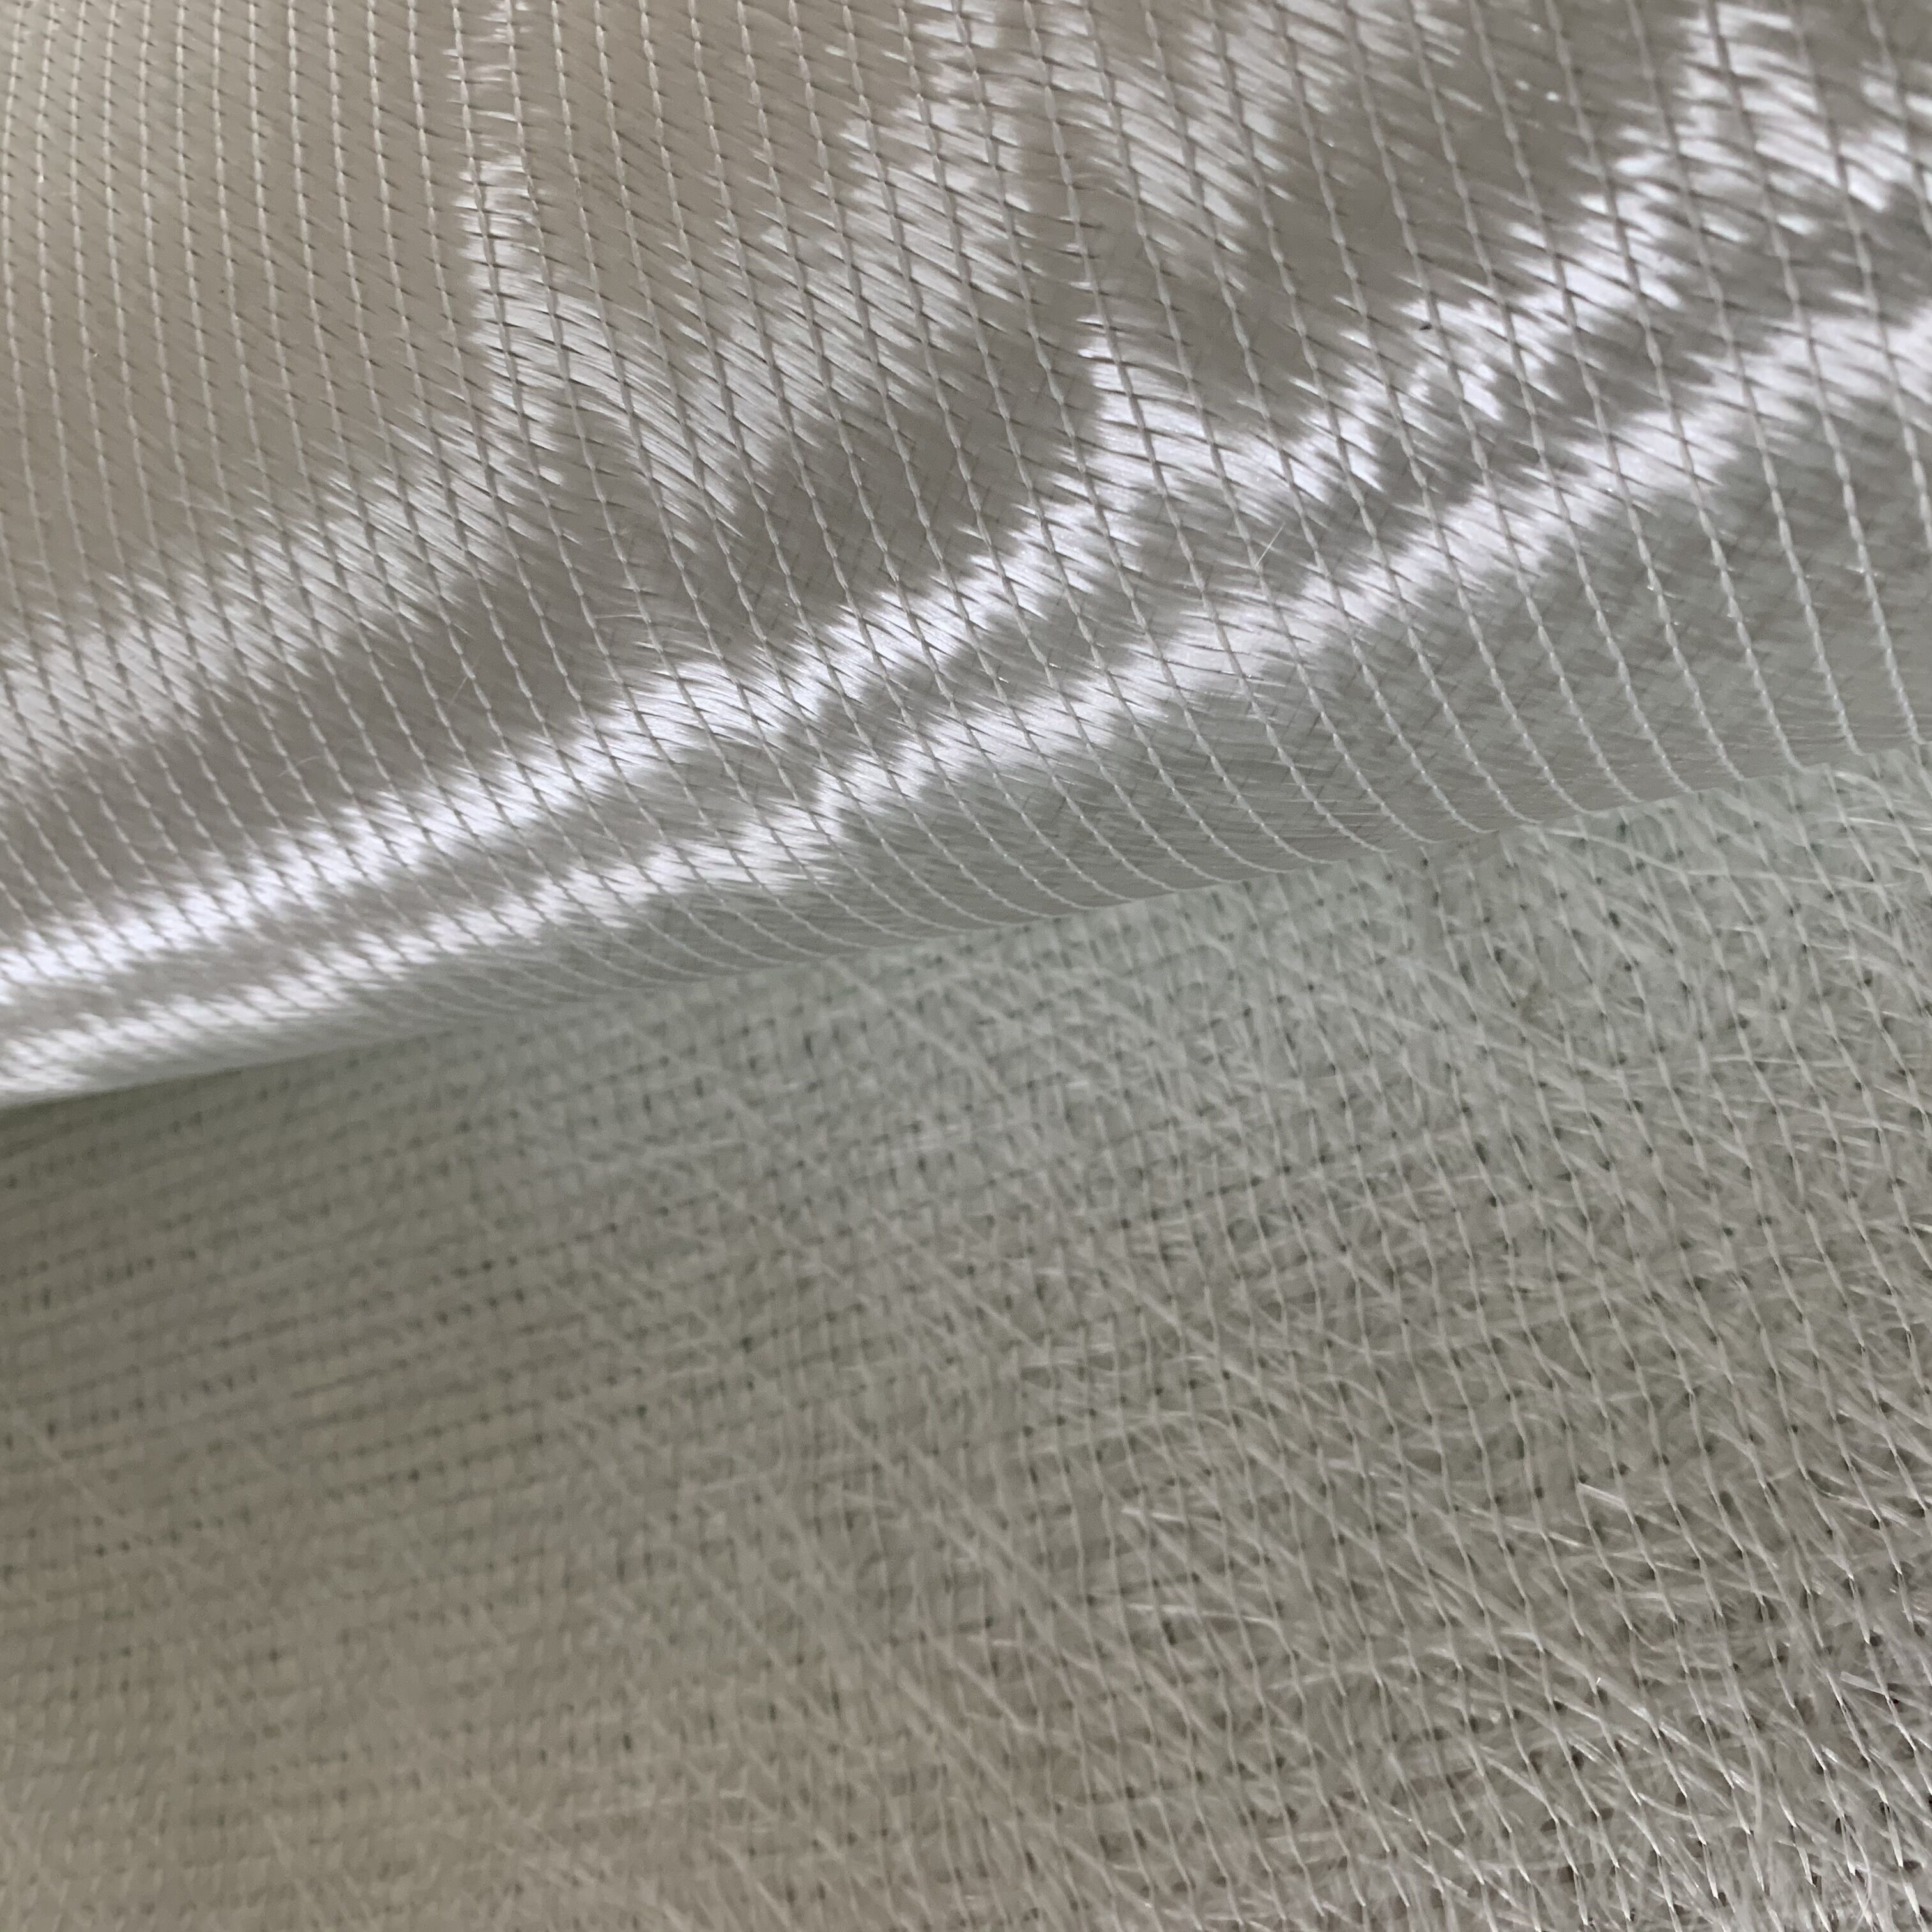 High quality +/- 45 degree biaxial fabric cloth epoxy fiberglass